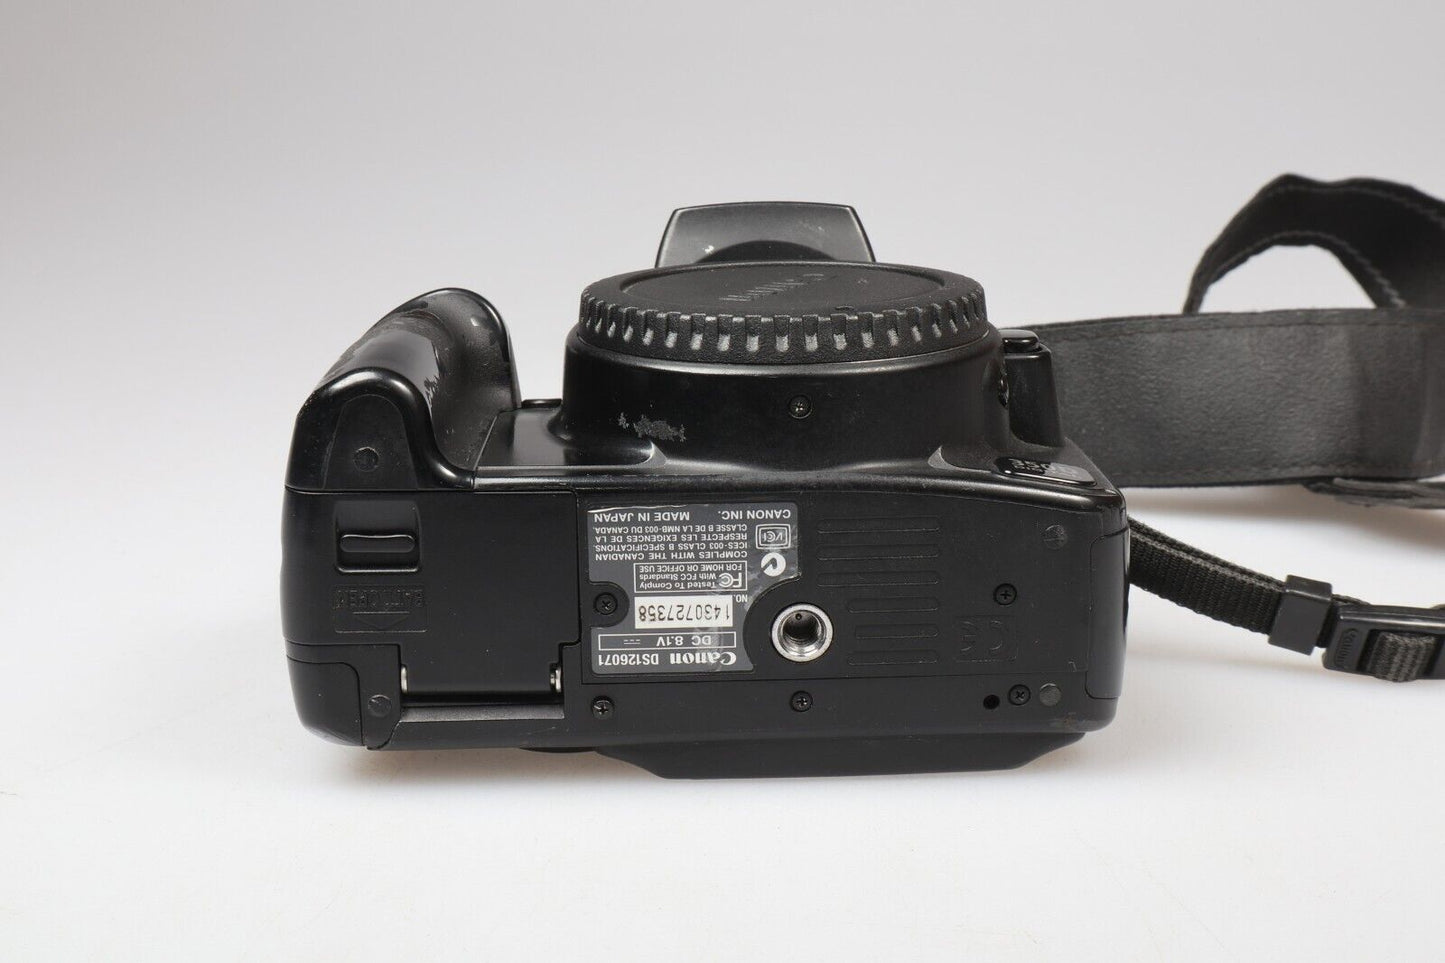 Canon EOS 350D | Digital SLR Camera | Body Only